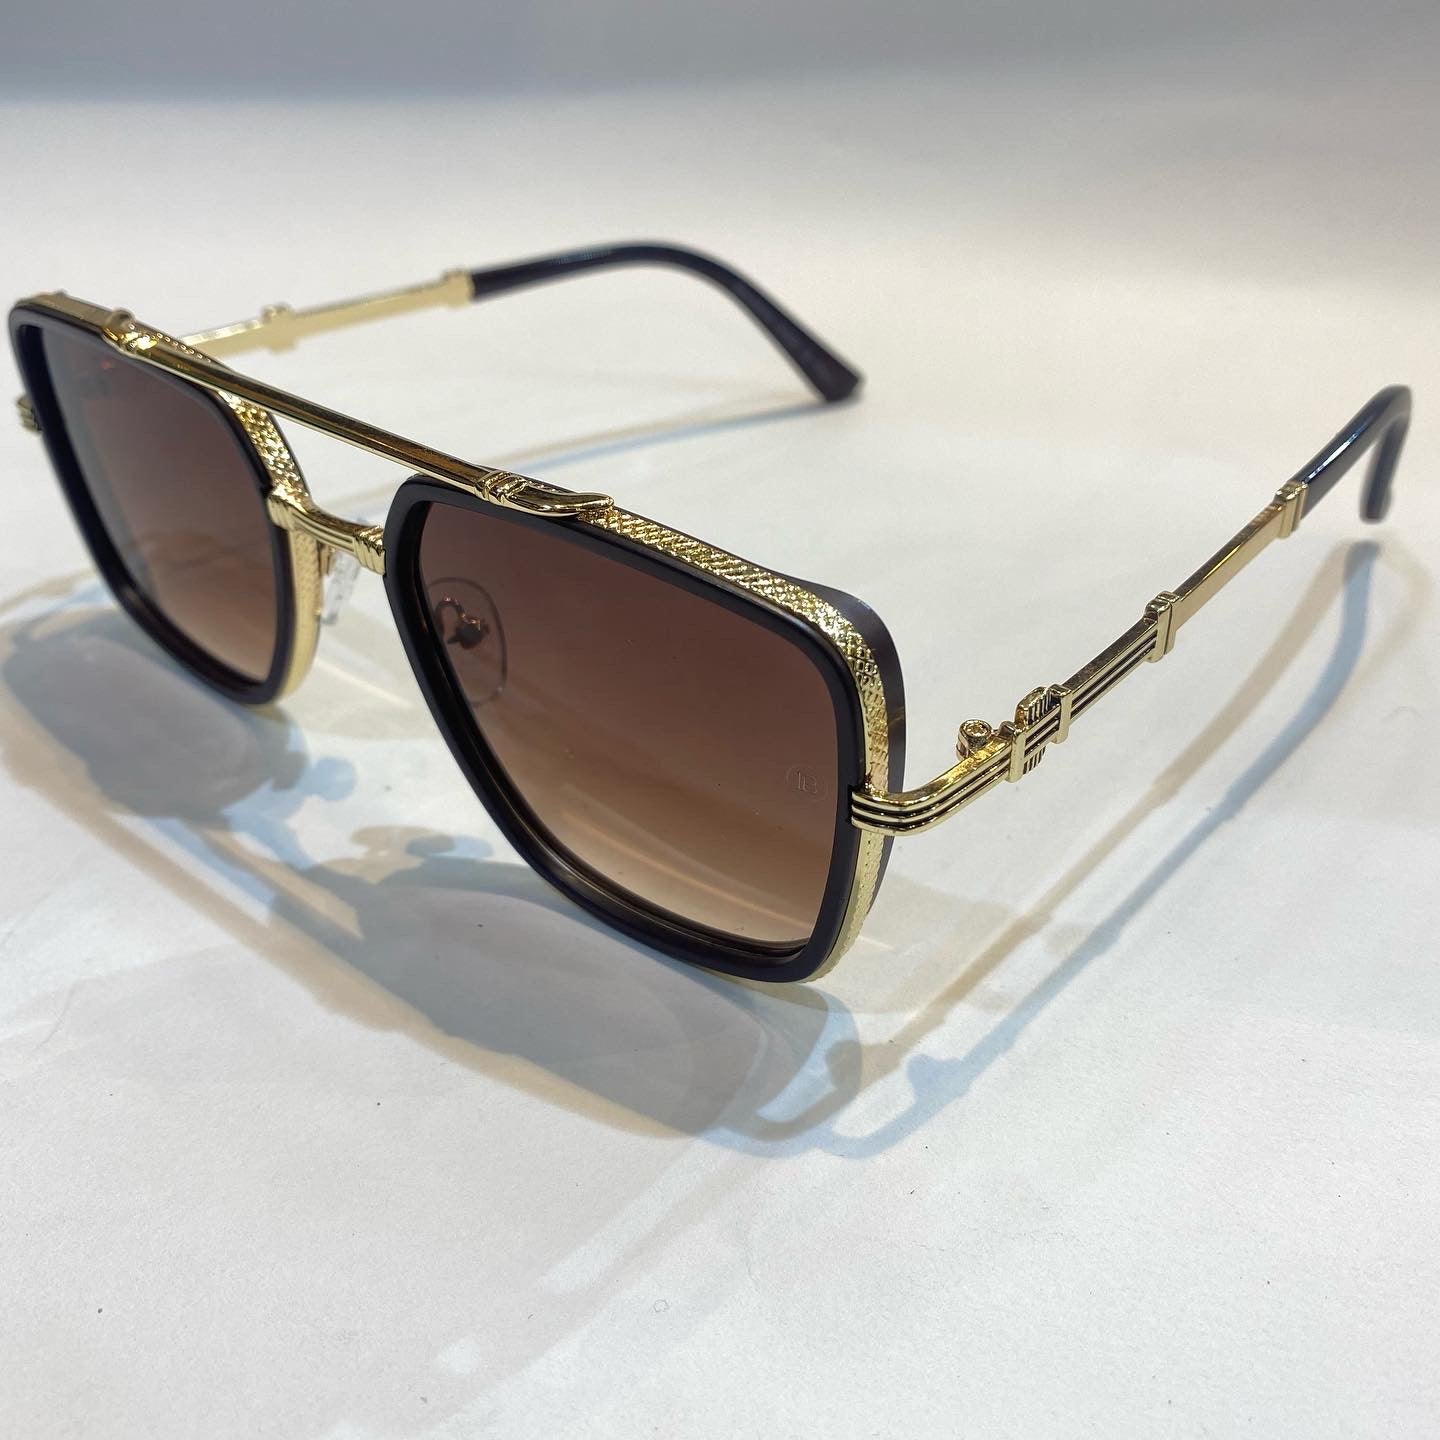 relais Gelijk Entertainment LAB Gold Frame Brown Shade Unisex Branded Sunglasses H5592 C1 57 15-14 –  Luxury D'Allure